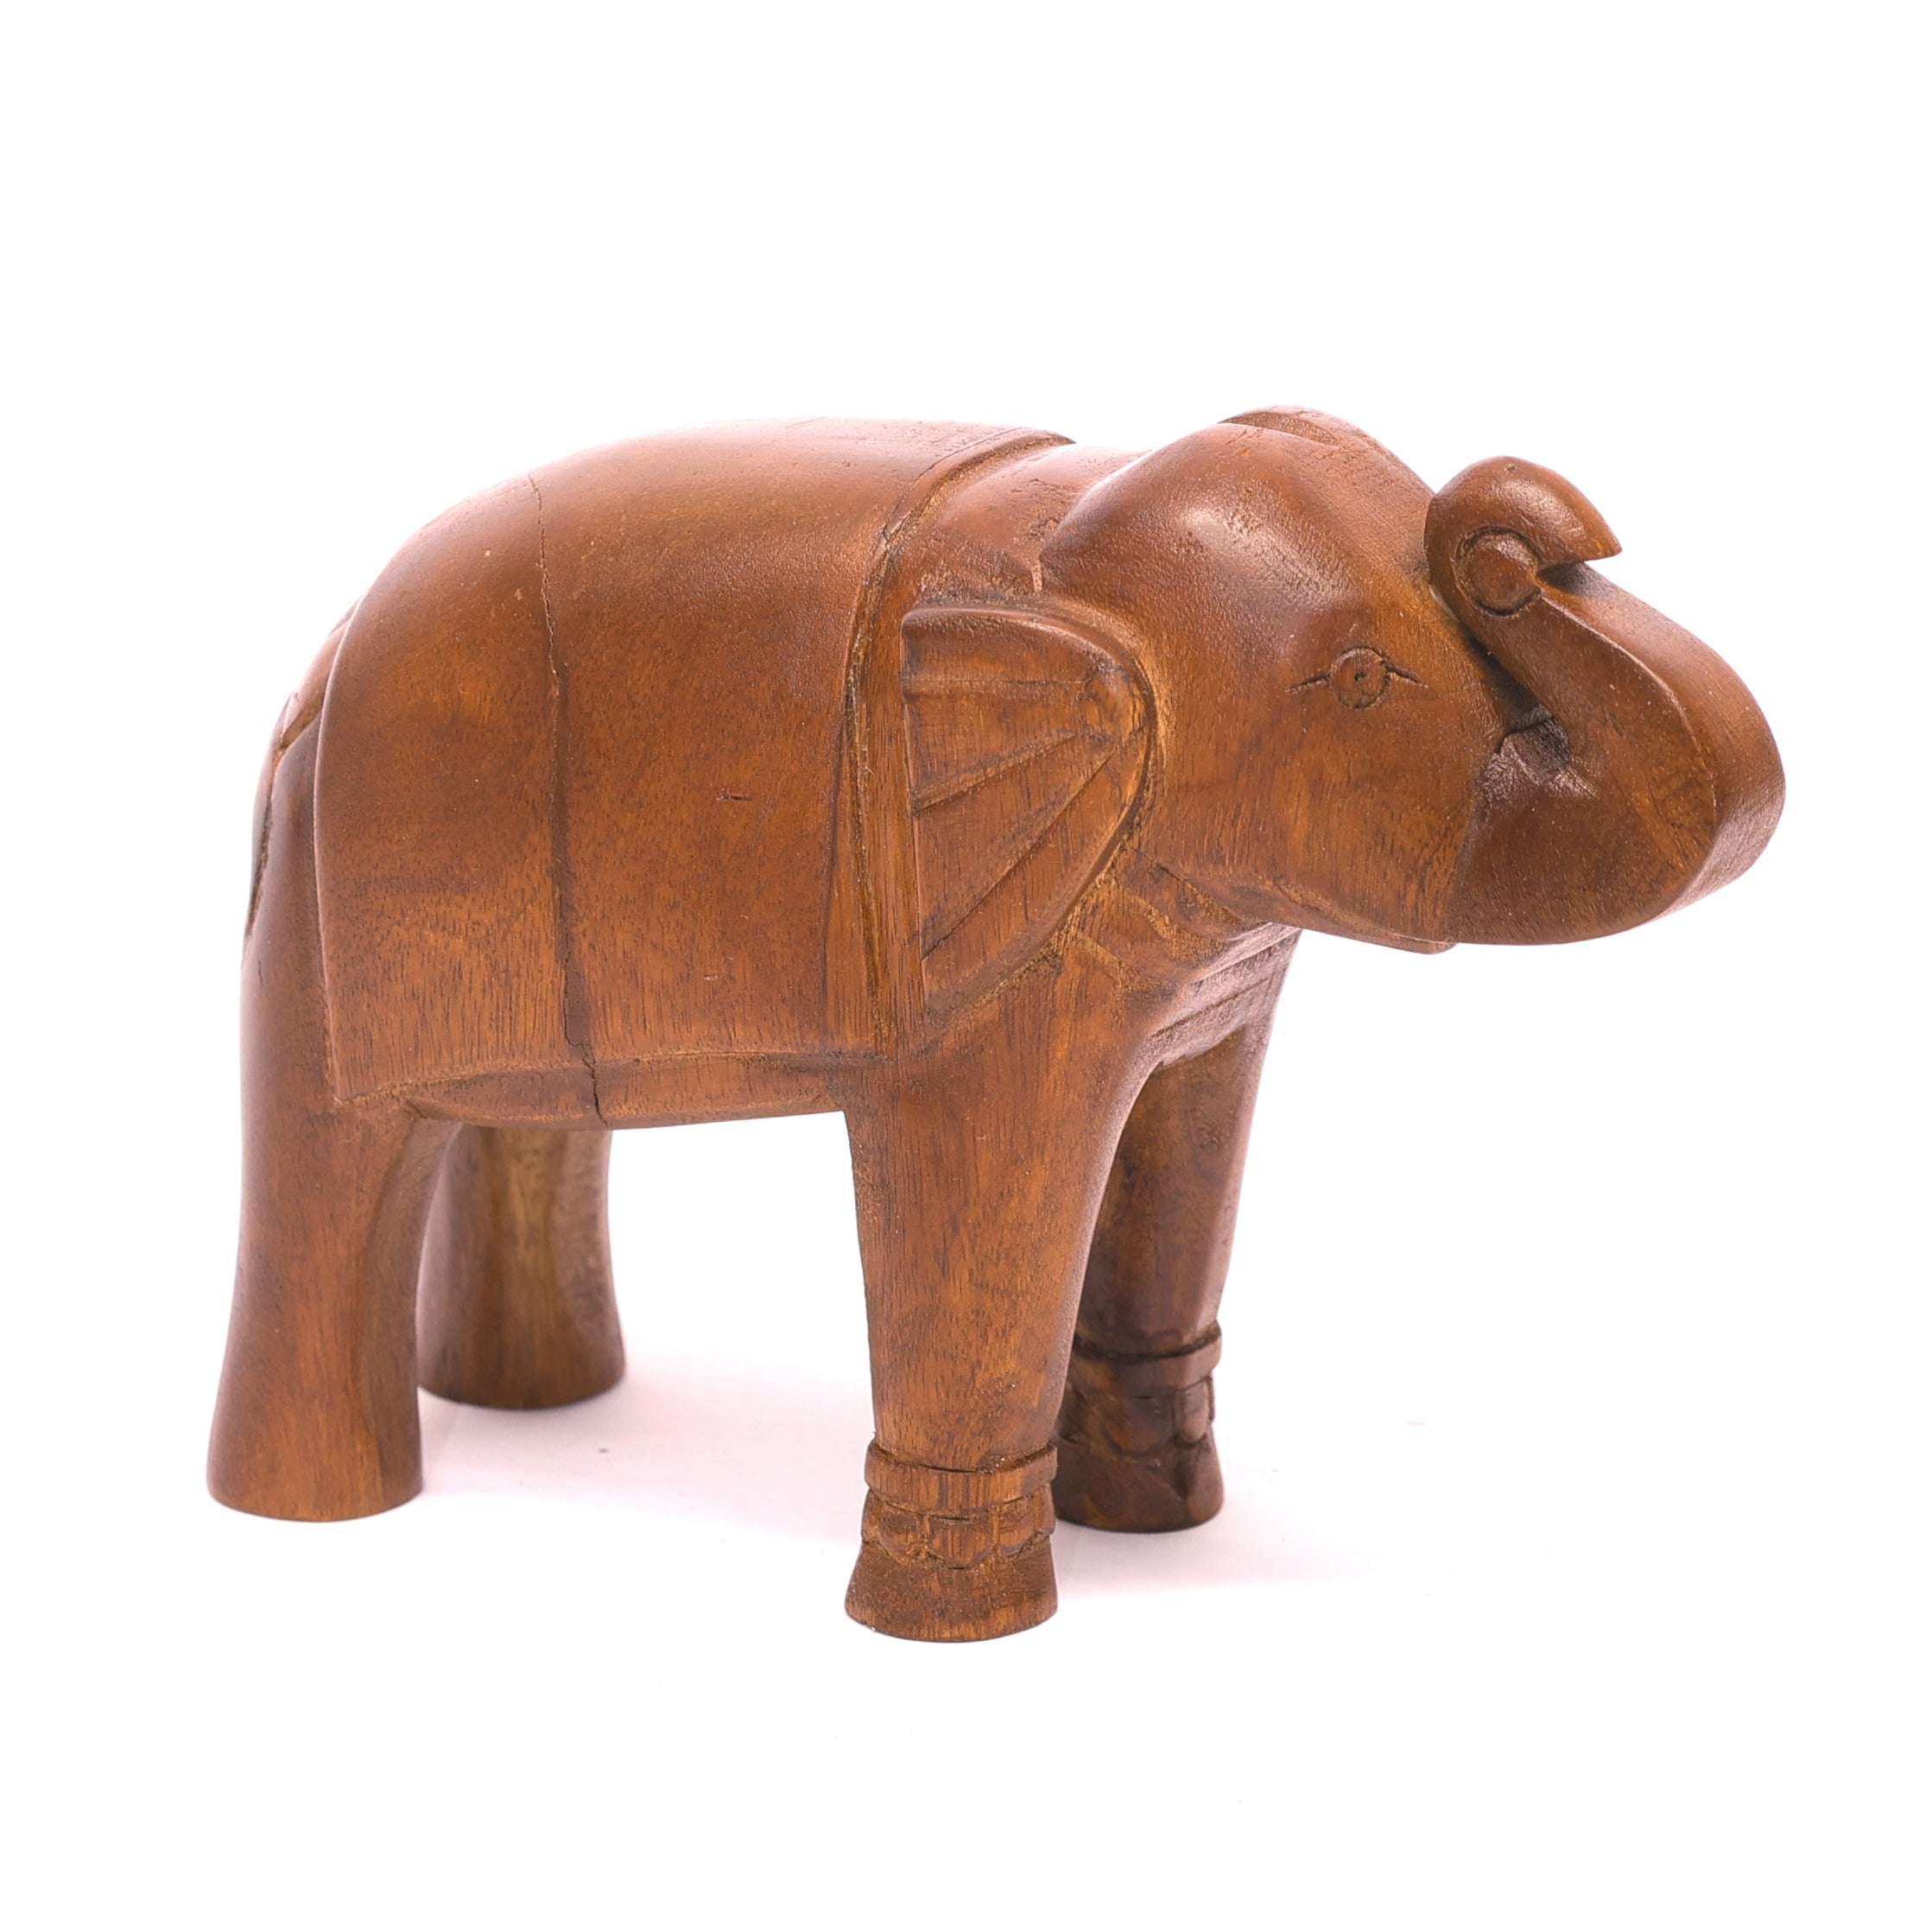 Regal Wooden Carved Elephant Animal Figurine